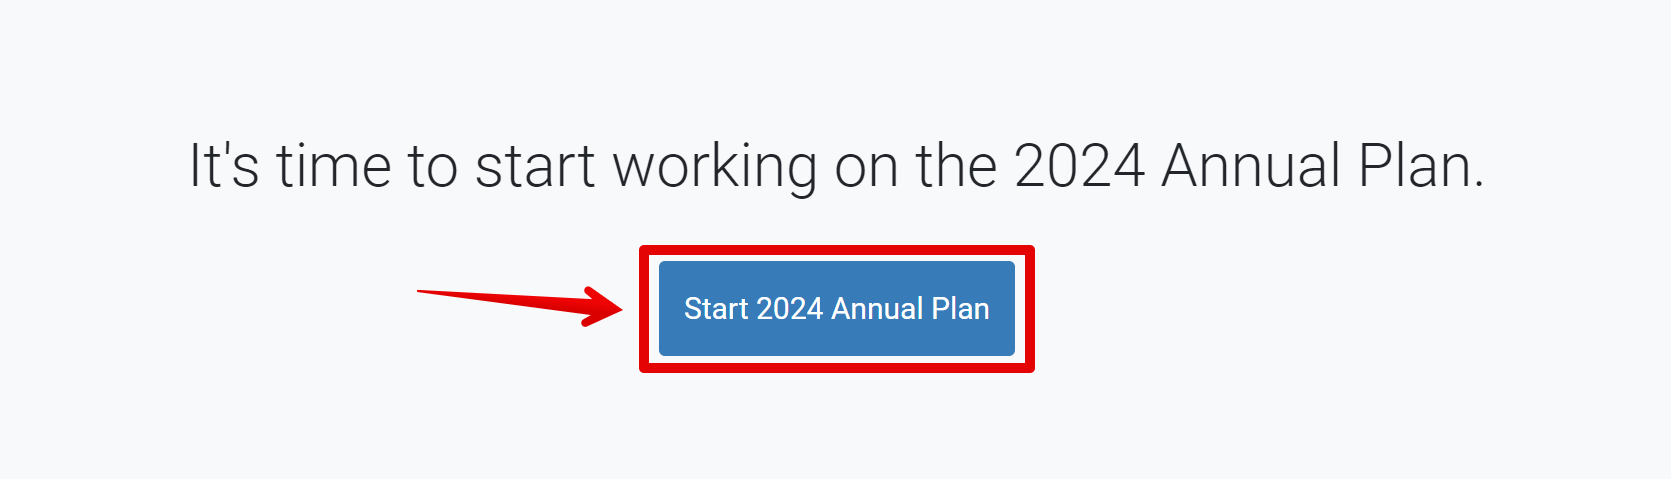 Start 2024 Annual Plan Button